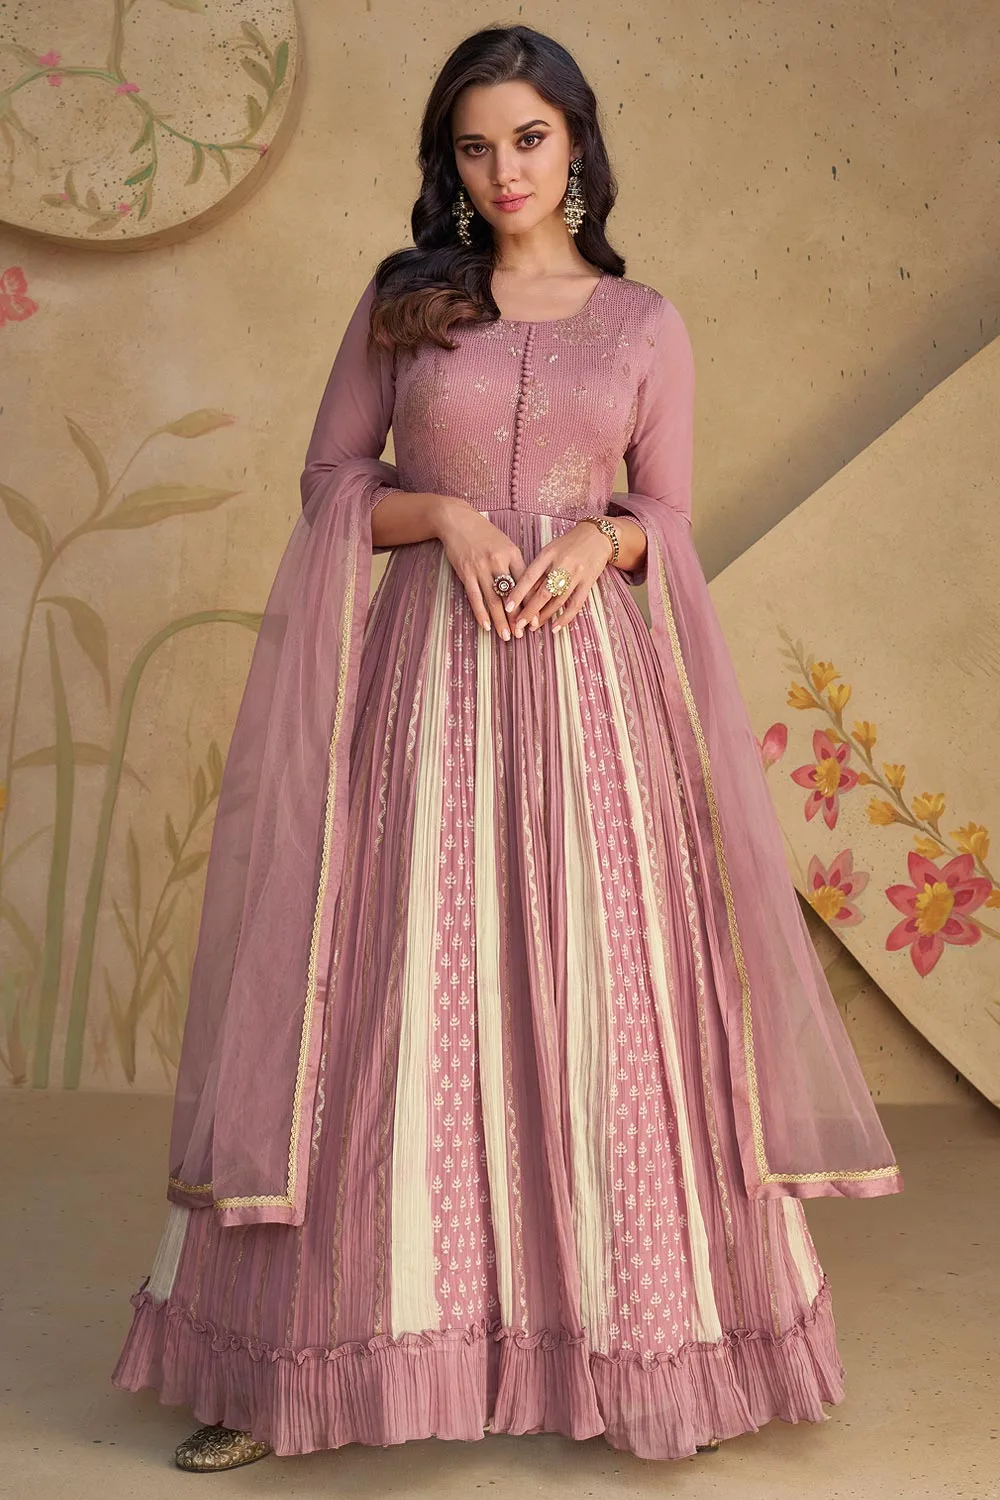 Royal Georgette Anarkali in Blush Pink with Flowing Net Dupatta